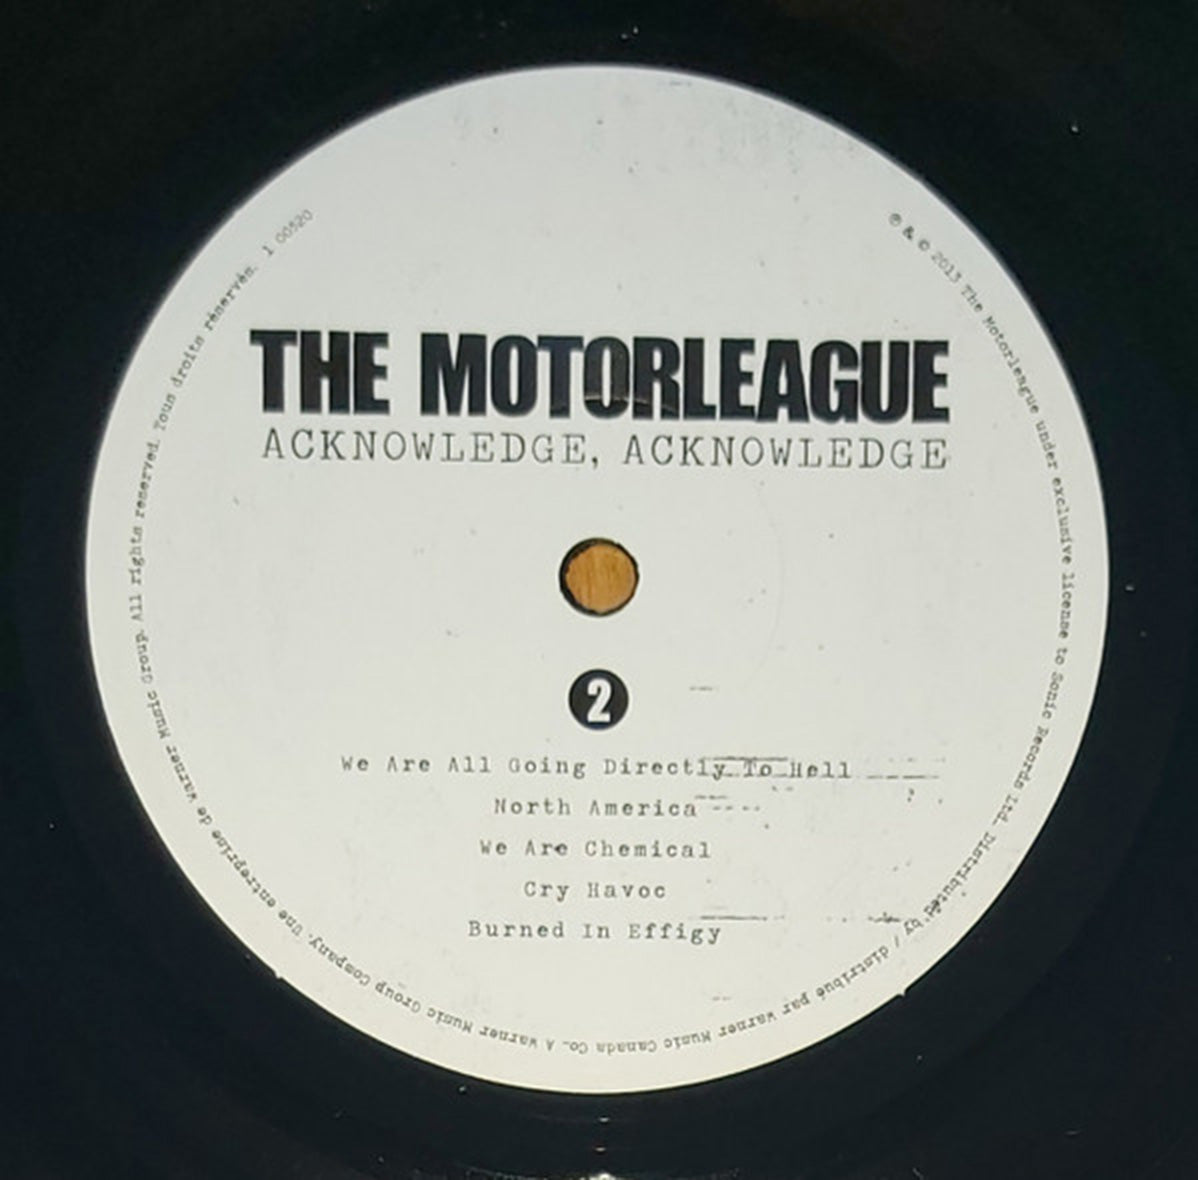 The Motorleague – Acknowledge Acknowledge  - Rare